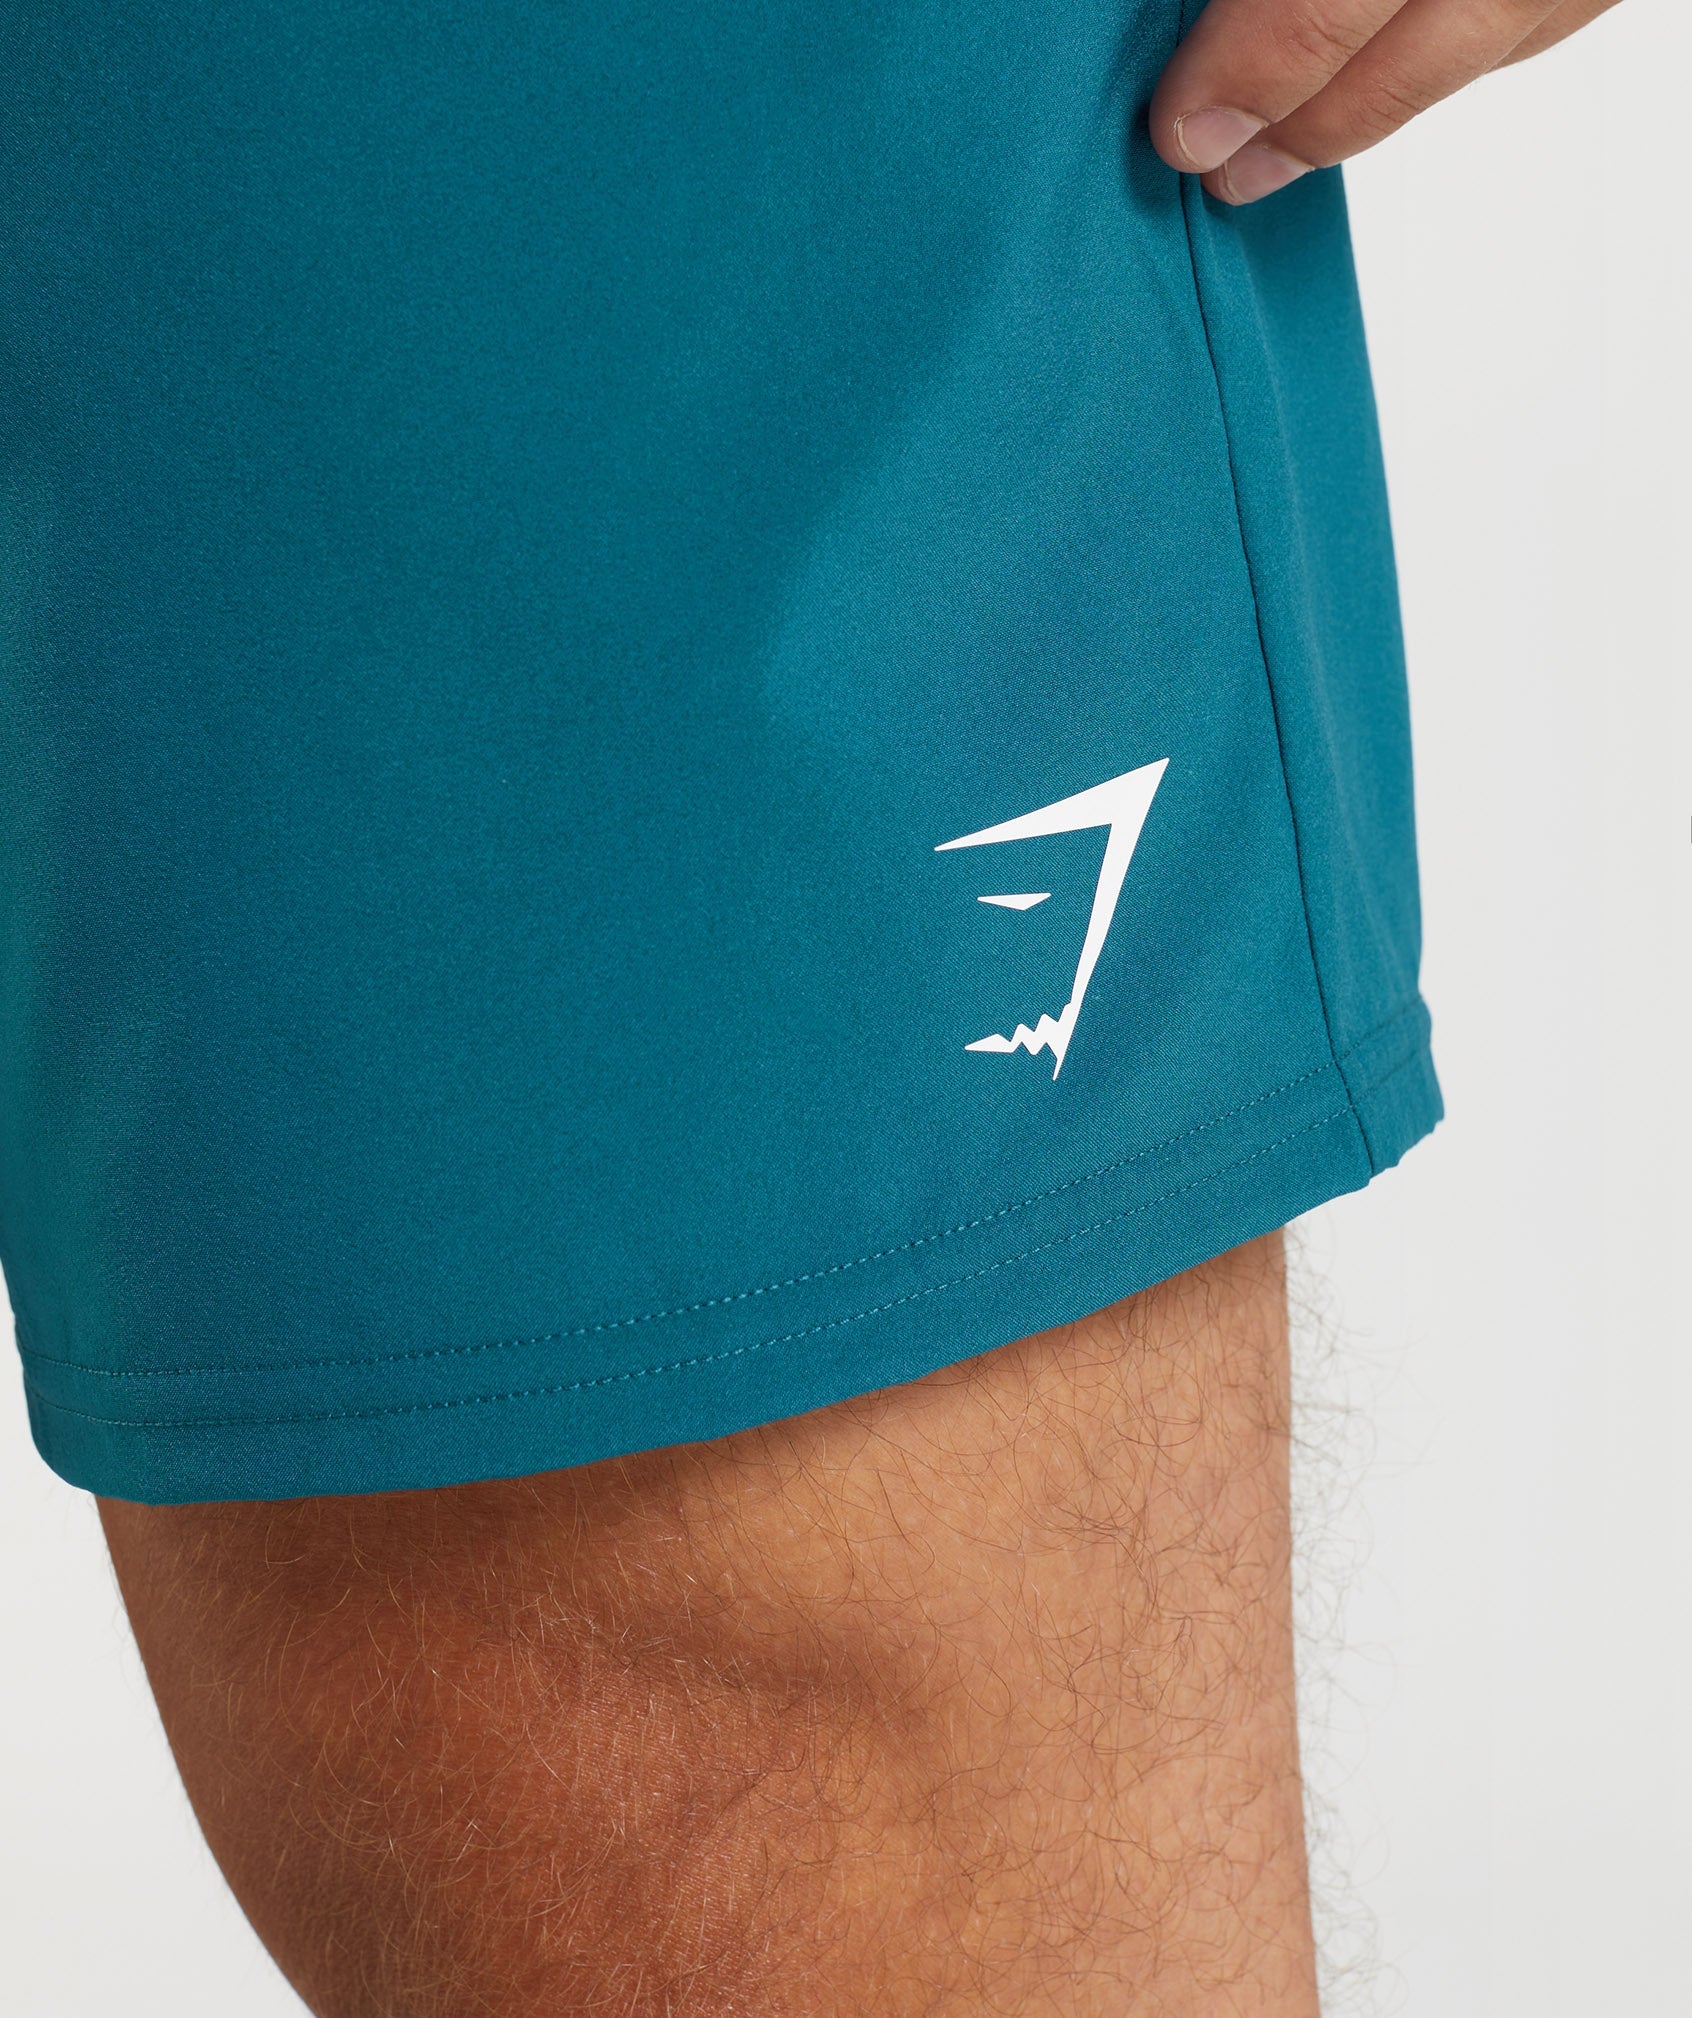 NEW Gymshark Men's Arrival 7” Teal Athletic Shorts, Size XL